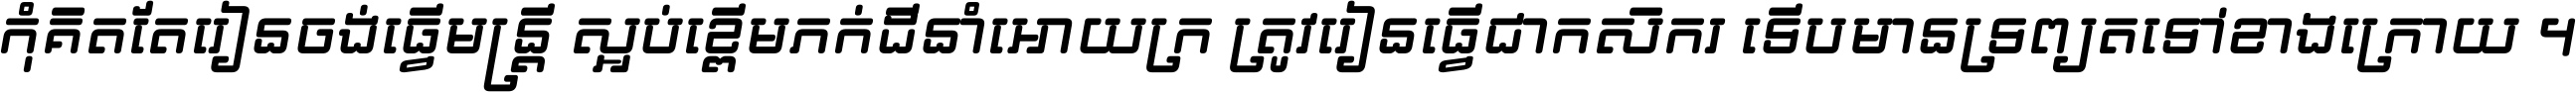 Khmer Compaq Italic